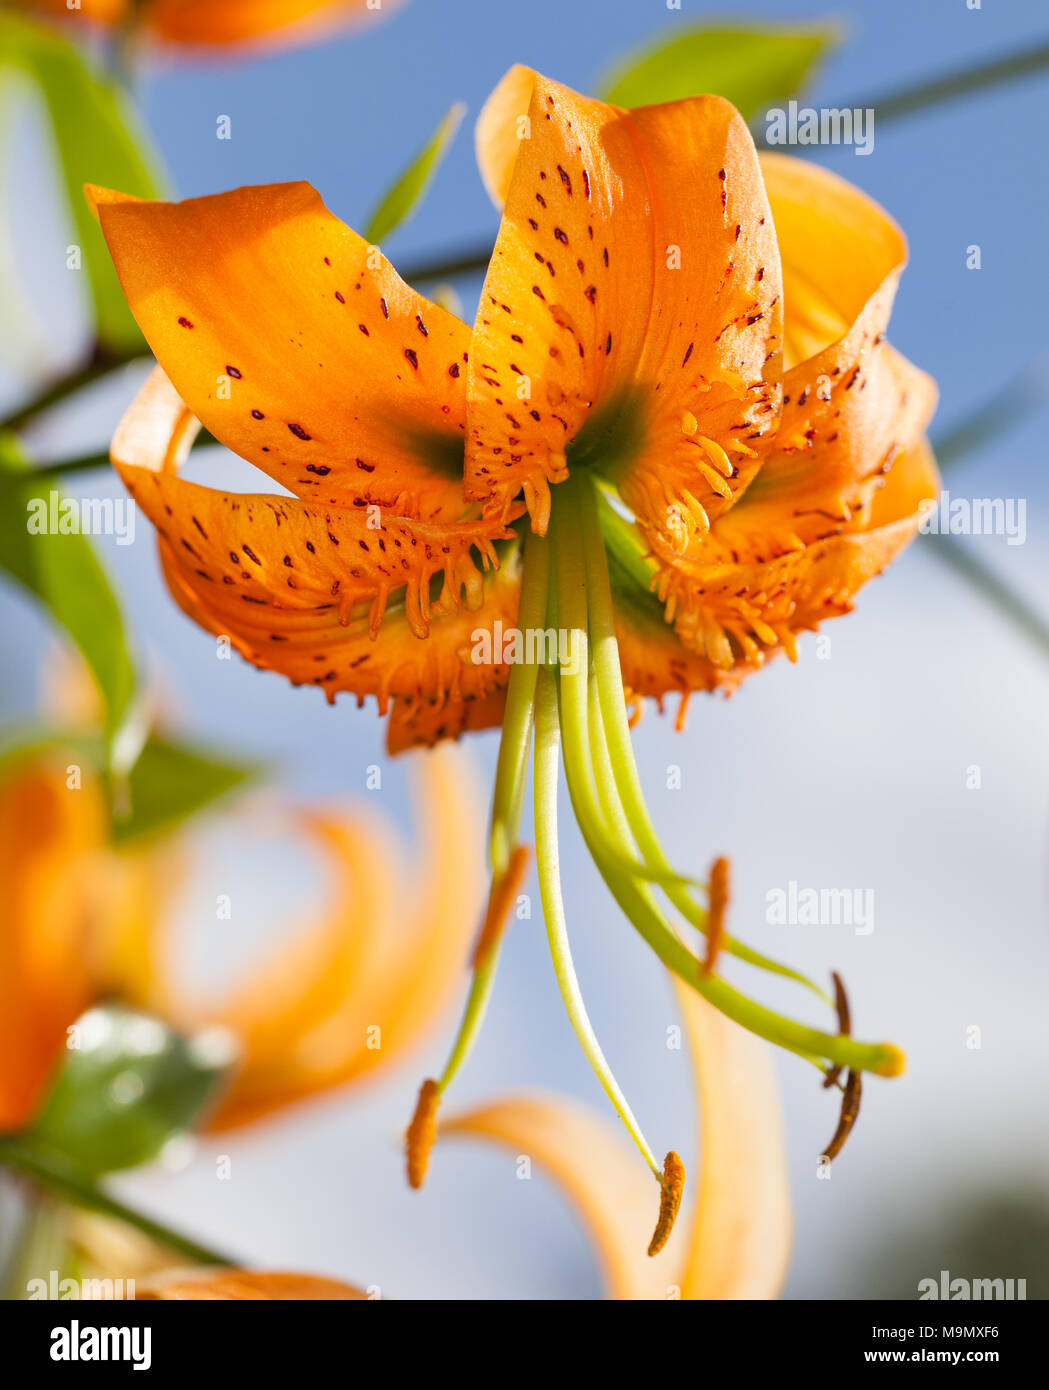 Henry’s Lily, Orangelilja (Lilium henryi) Stock Photo